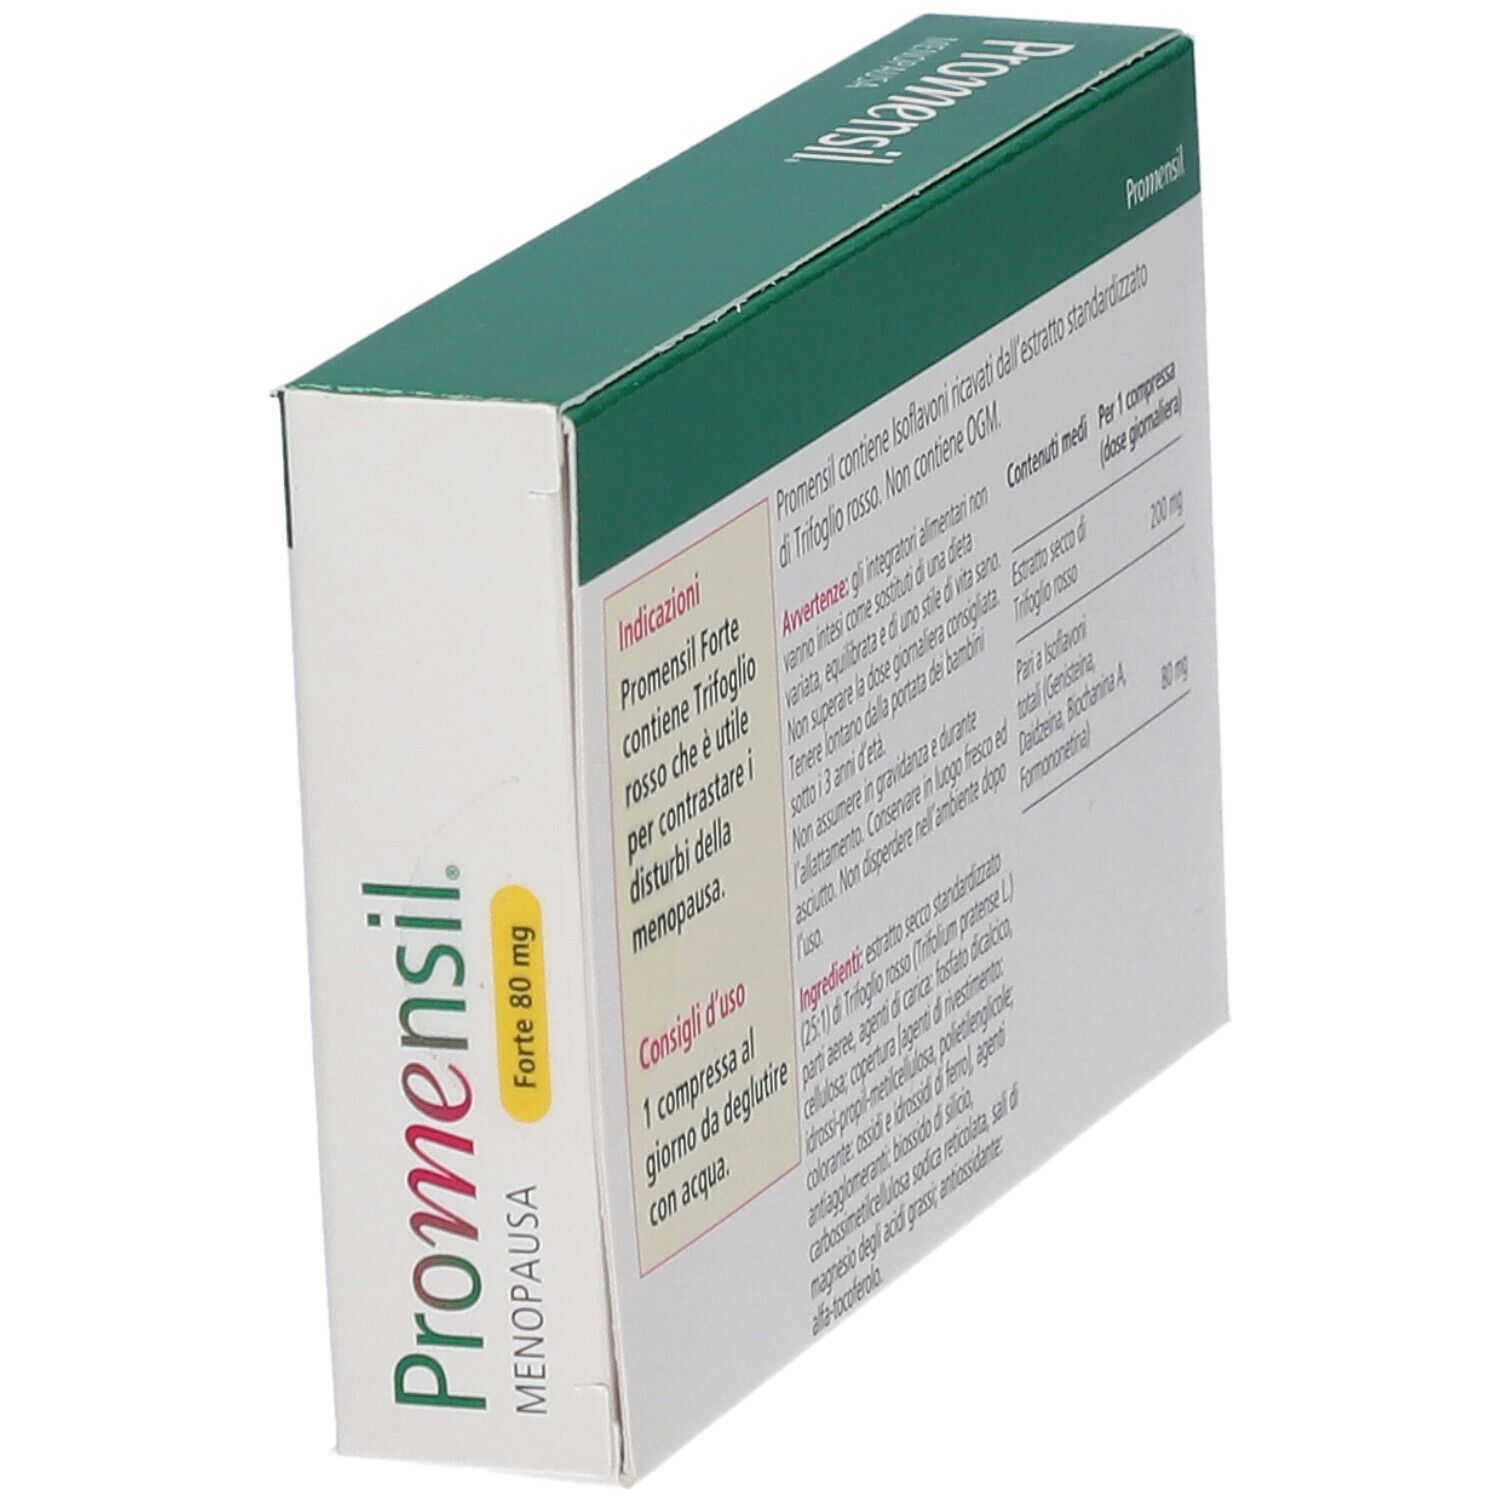 Promensil® Menopausa Forte